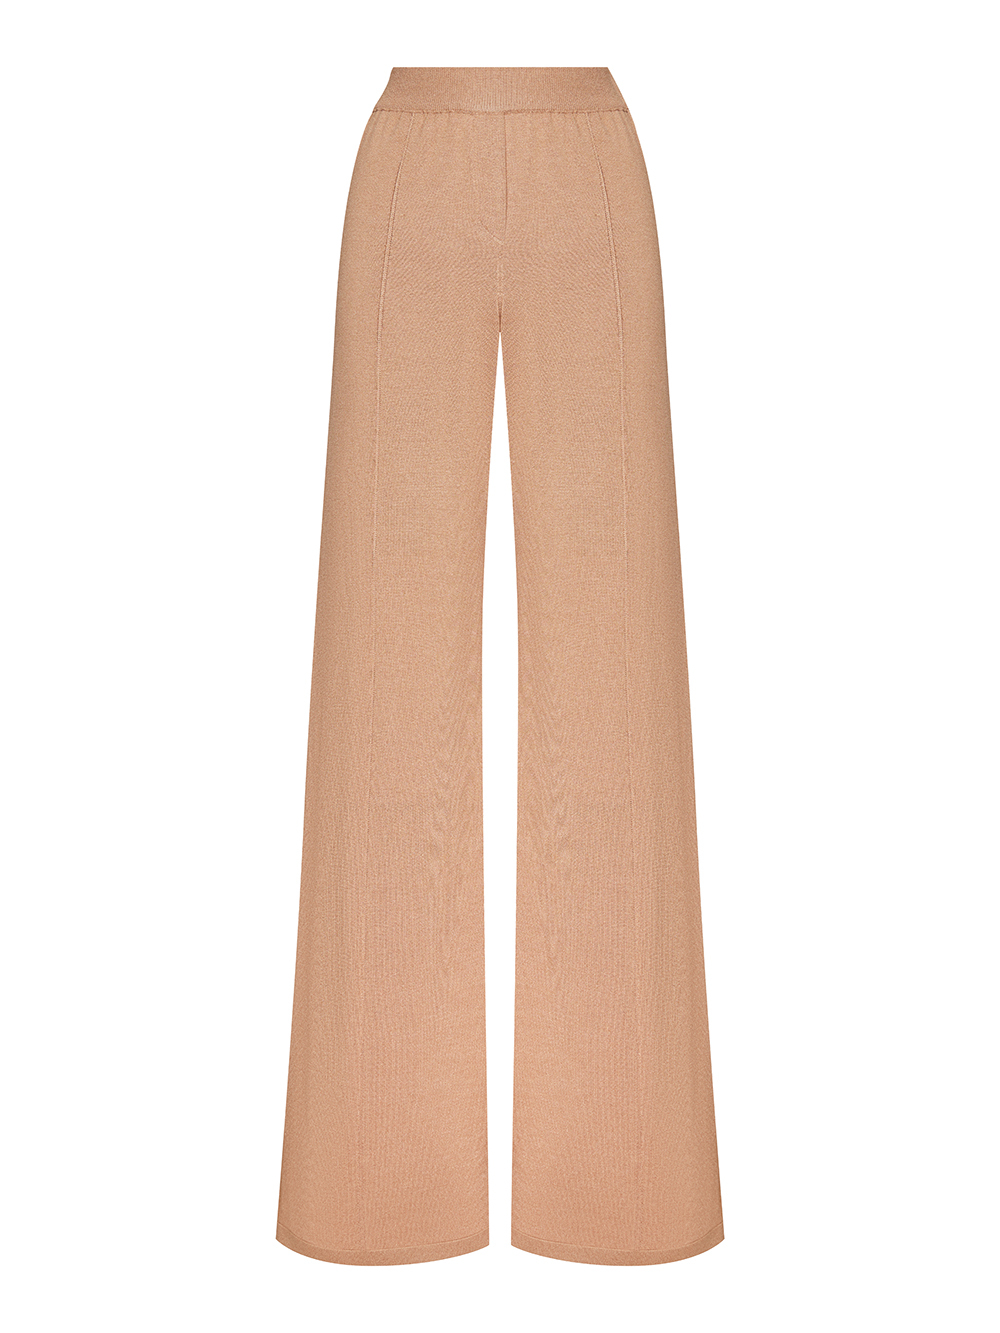 Женские брюки светло-бежевого цвета из шелка и вискозы